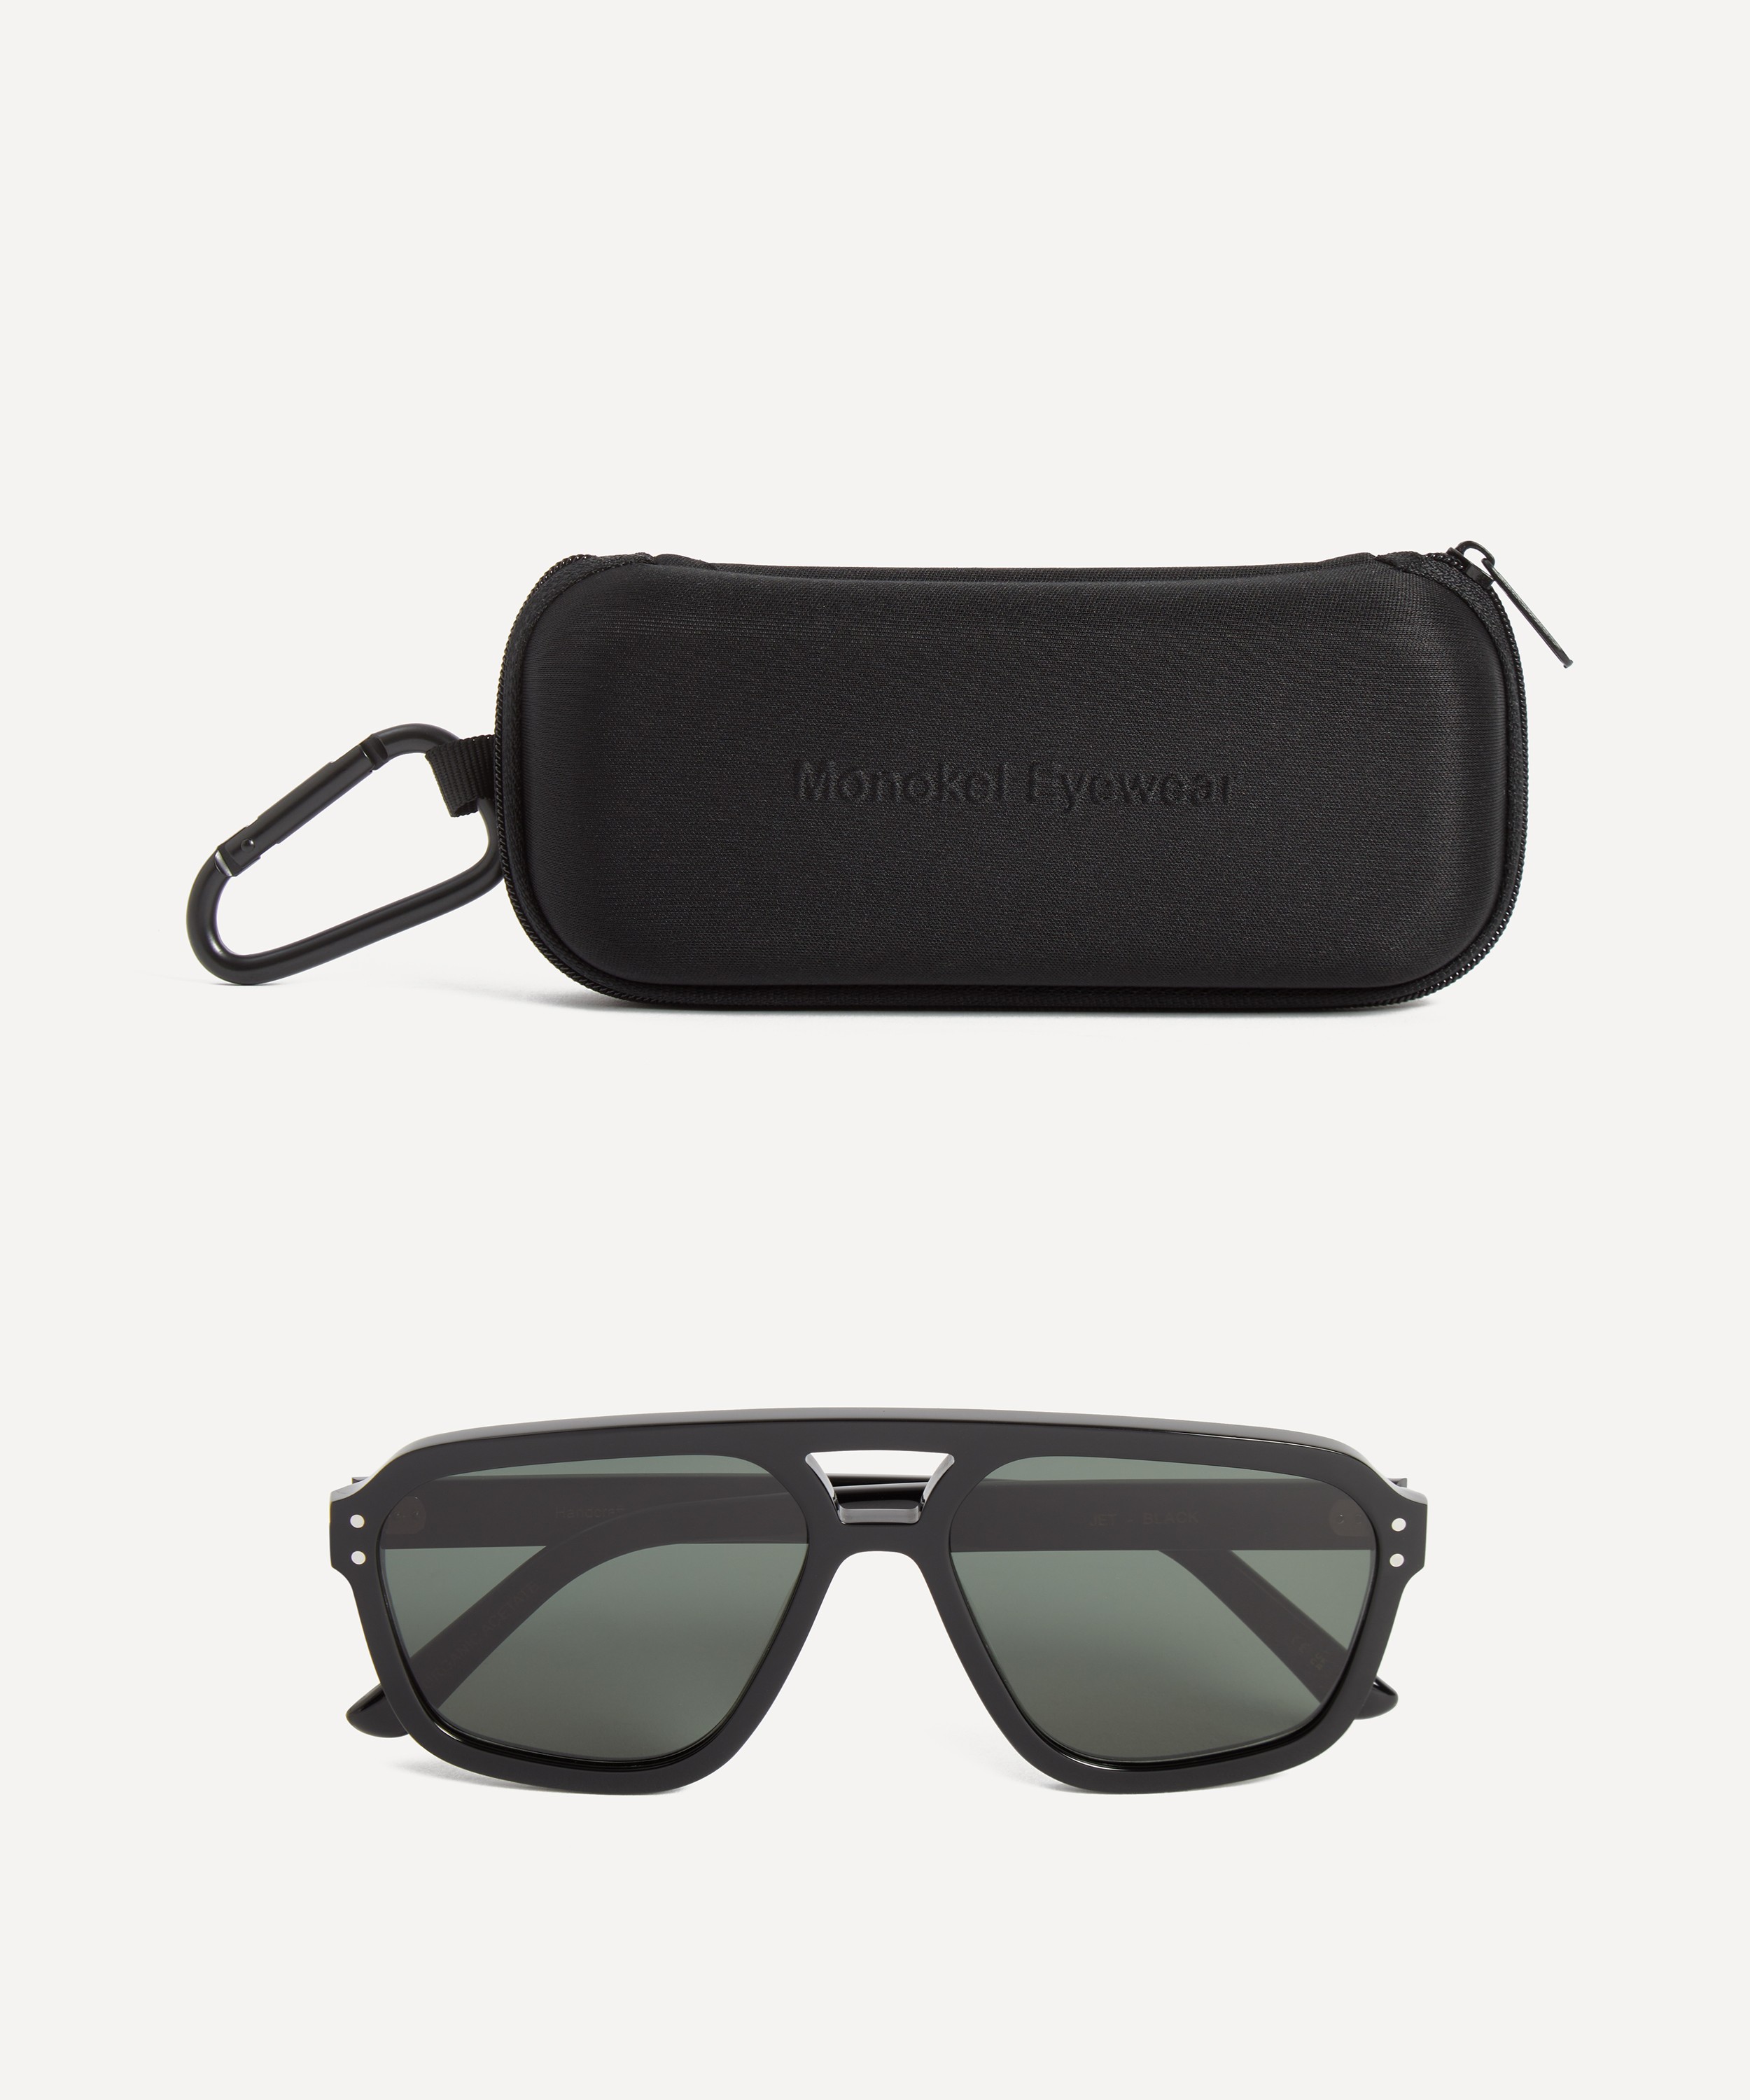 Monokel Eyewear - Jet Aviator Sunglasses image number 3